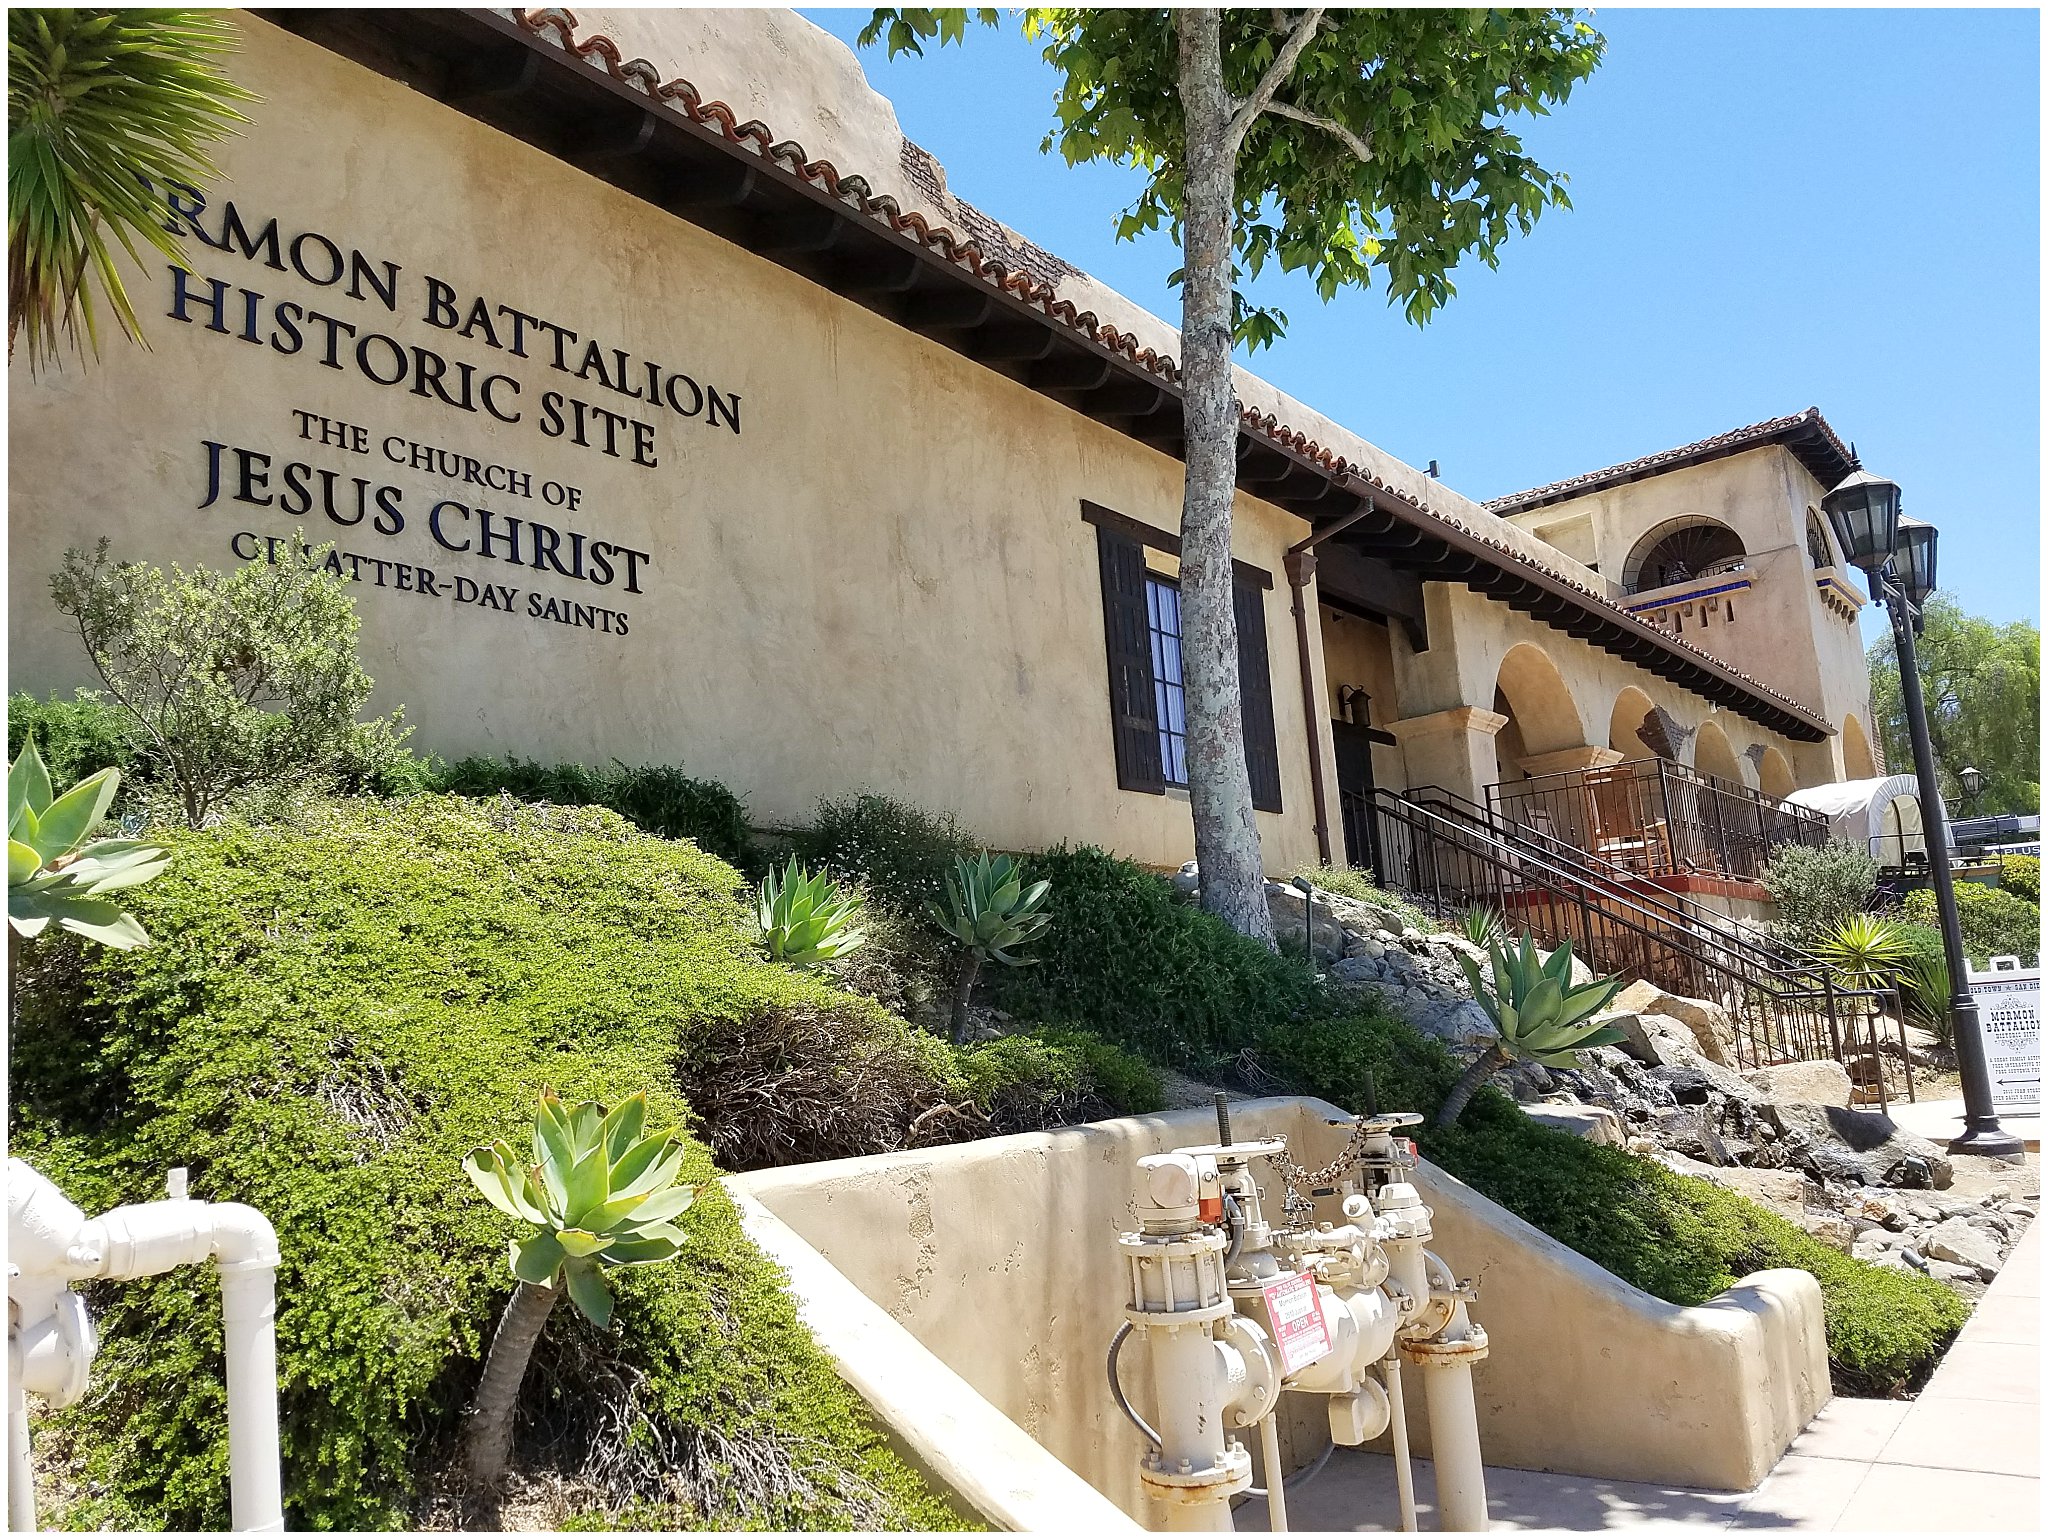 Mormon Battalion State Historic Site - San diego 